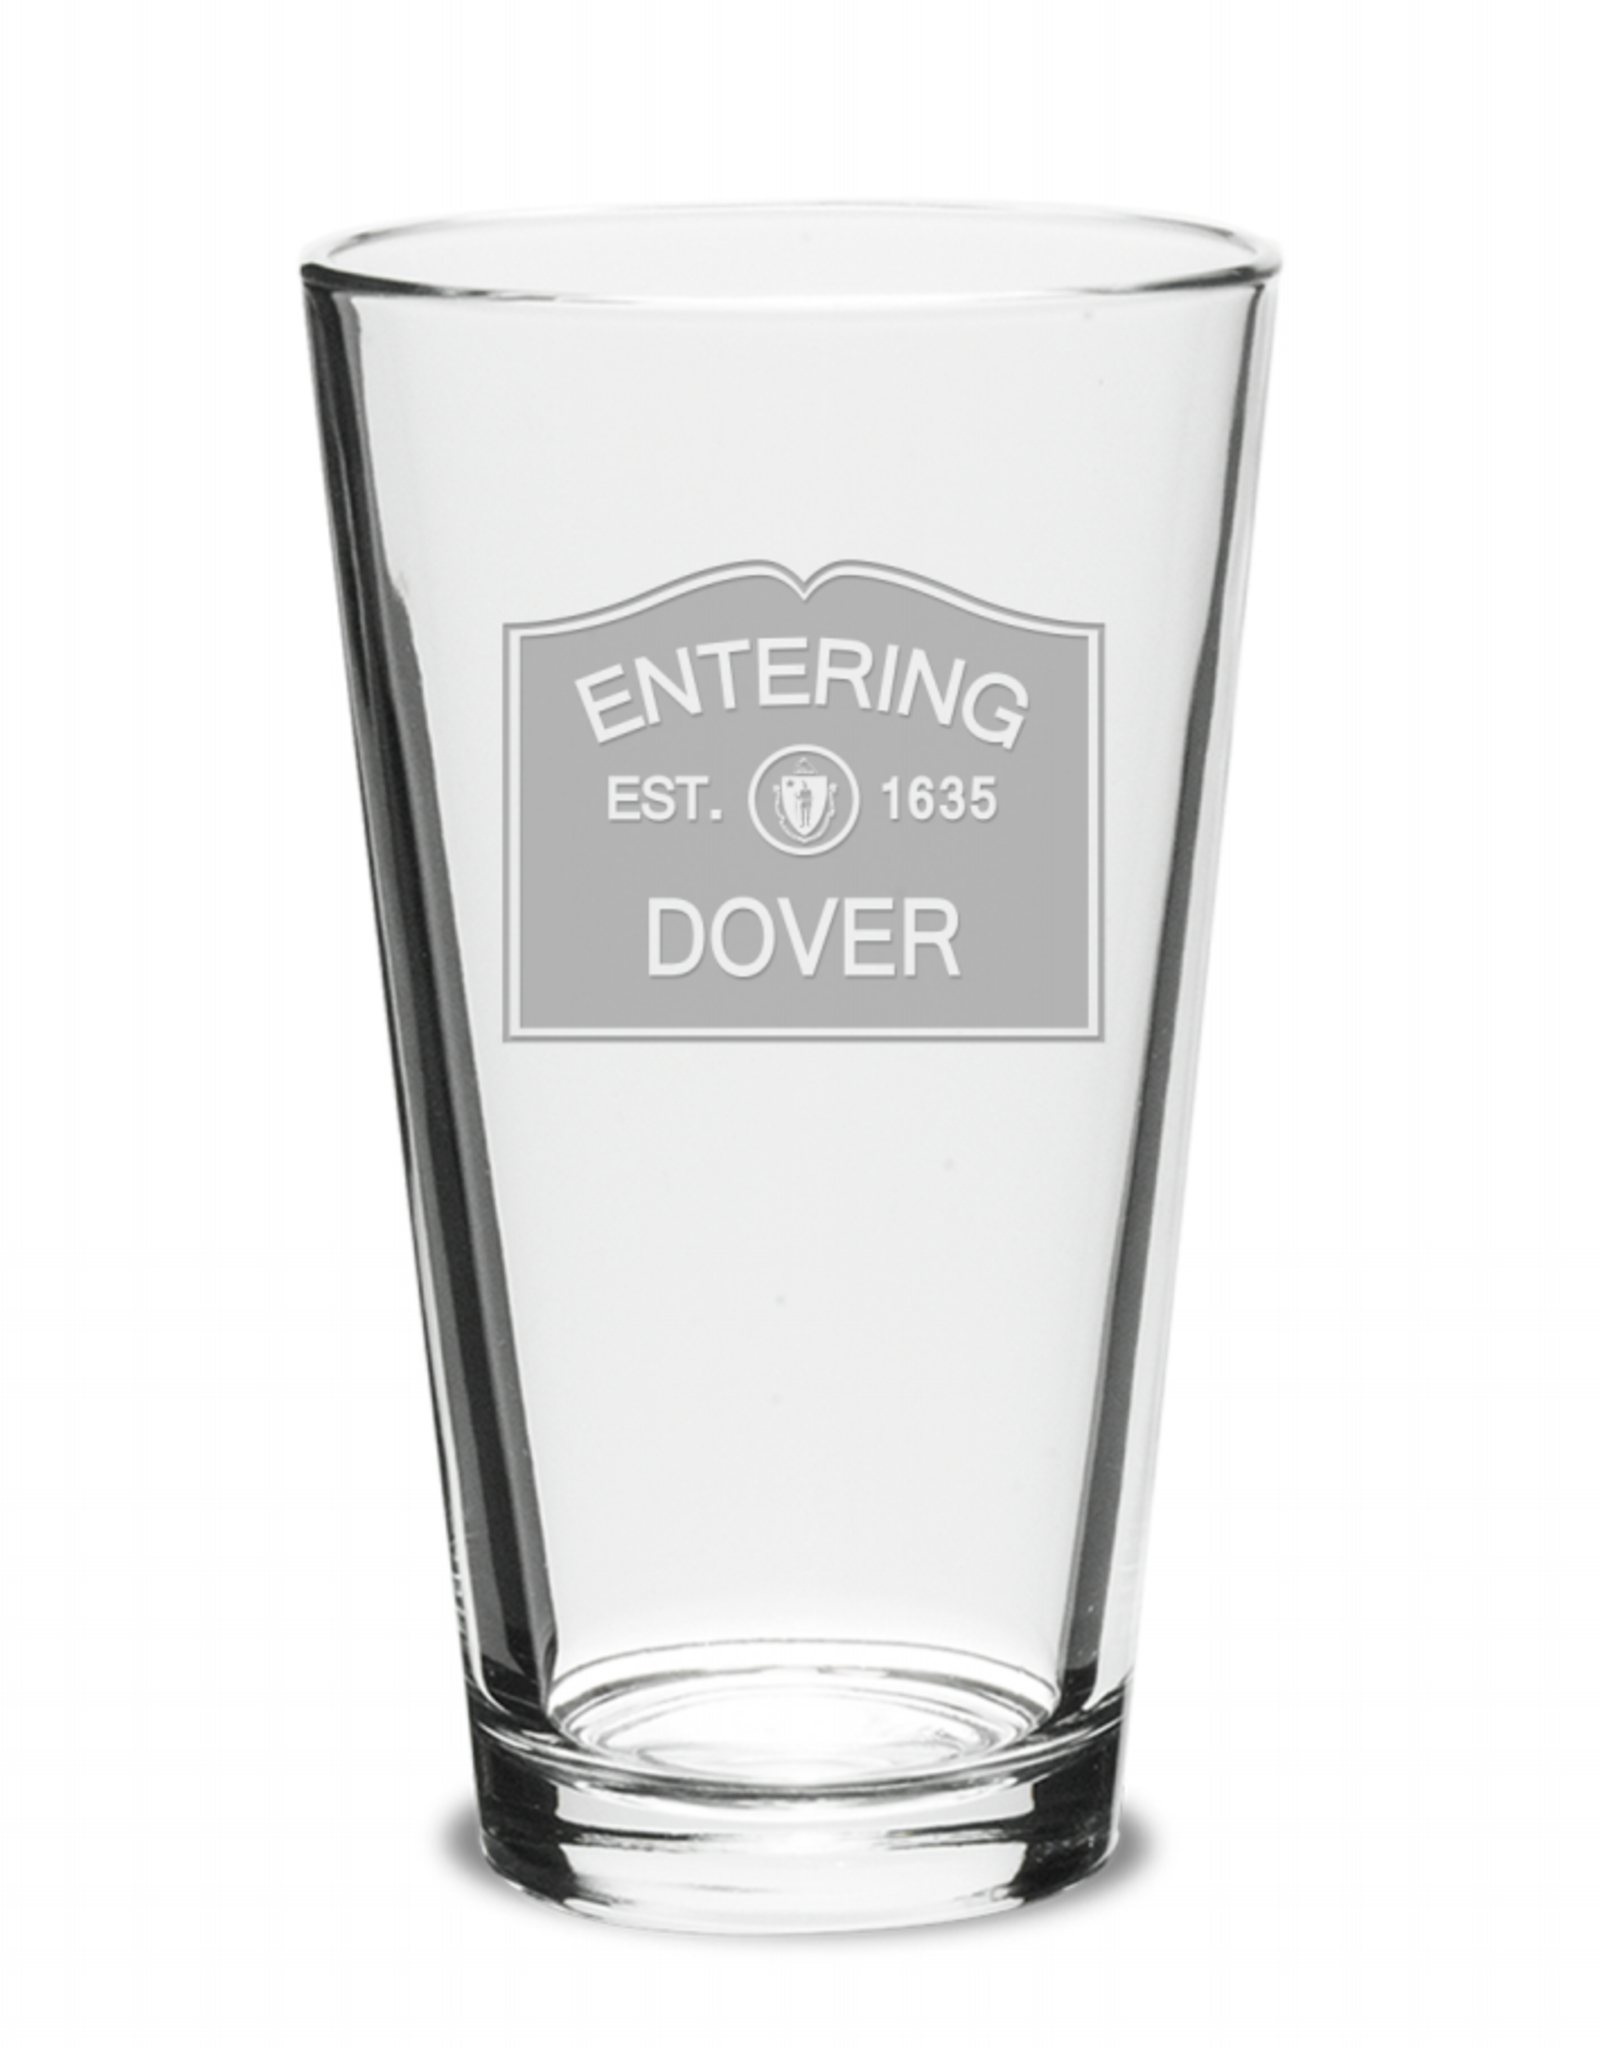 Dover Glassware - Entering Dover 1635 Pint Glass